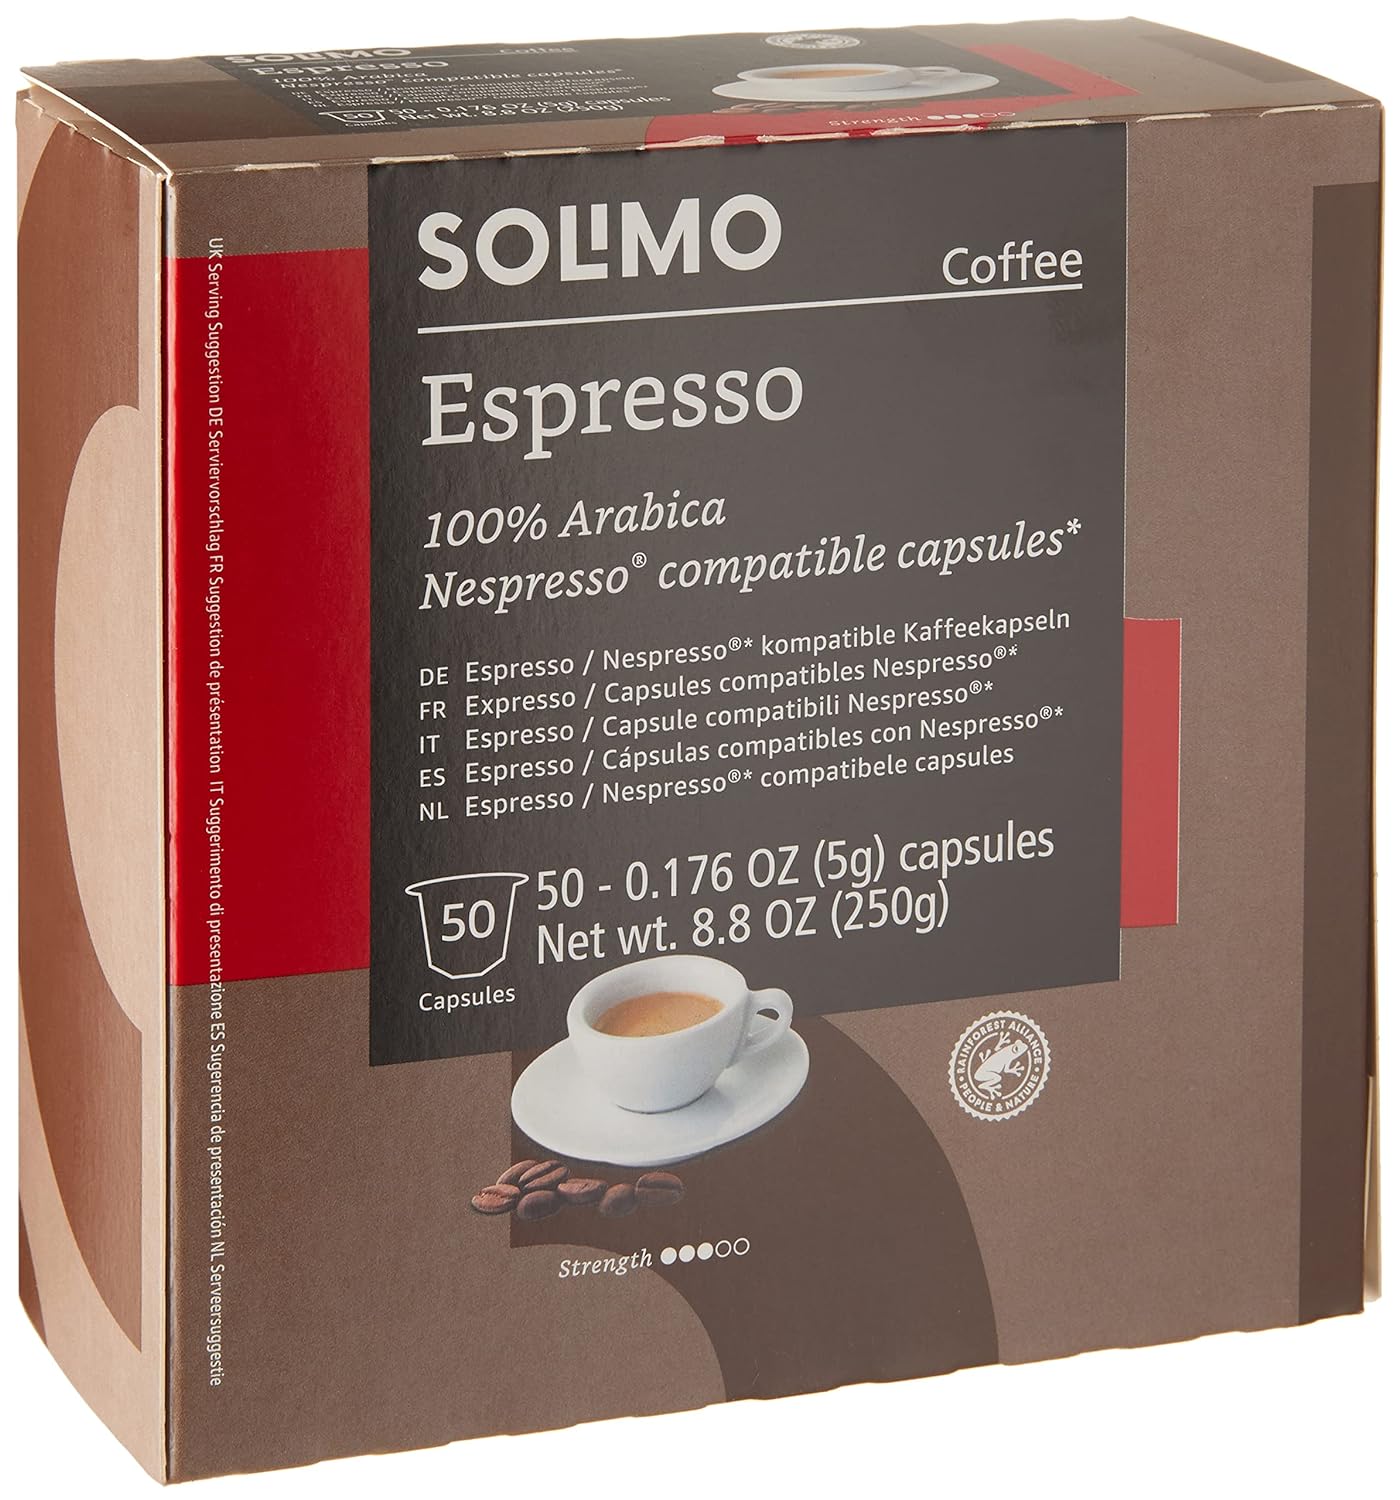 50-Count Solimo Nespresso Compatible Coffee Capsules (Espresso or Ristretto) $12.90 ($0.25 each) w/ S&S + Free Shipping w/ Prime or on $35+